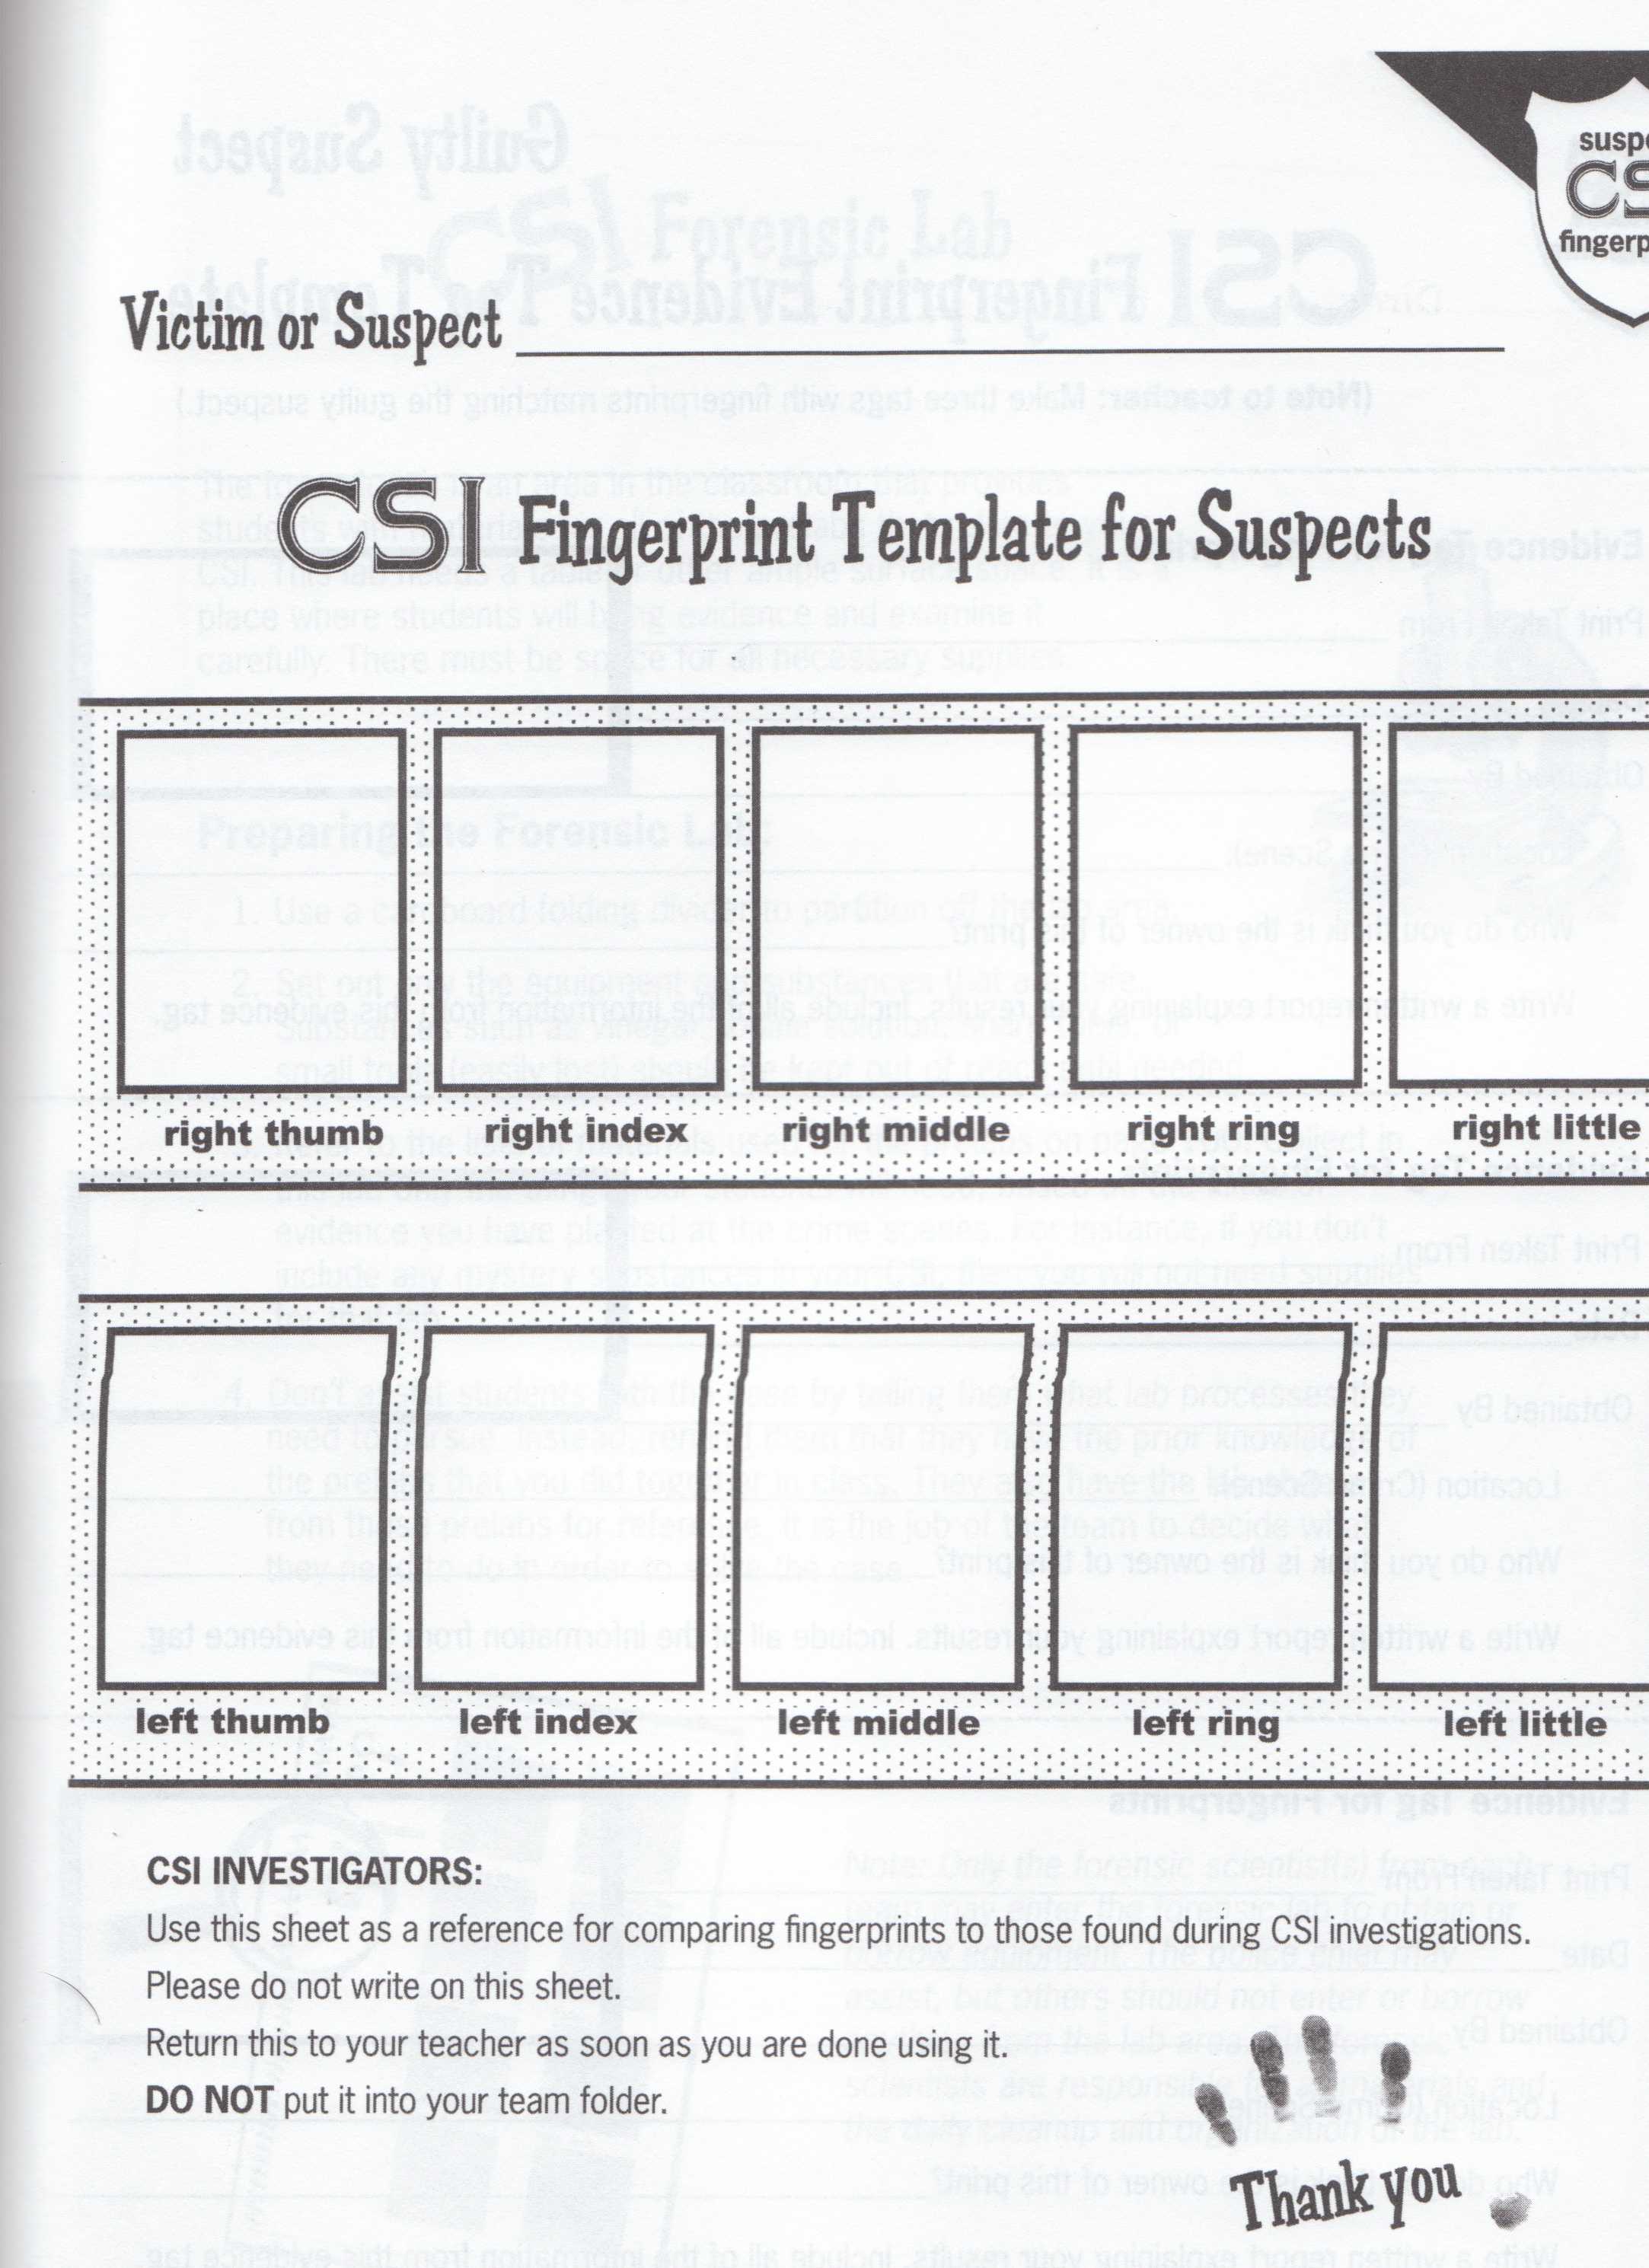 Self Esteem Worksheets Pdf as Well as Fingerprint Analysis Worksheet the Best Worksheets Image Collection